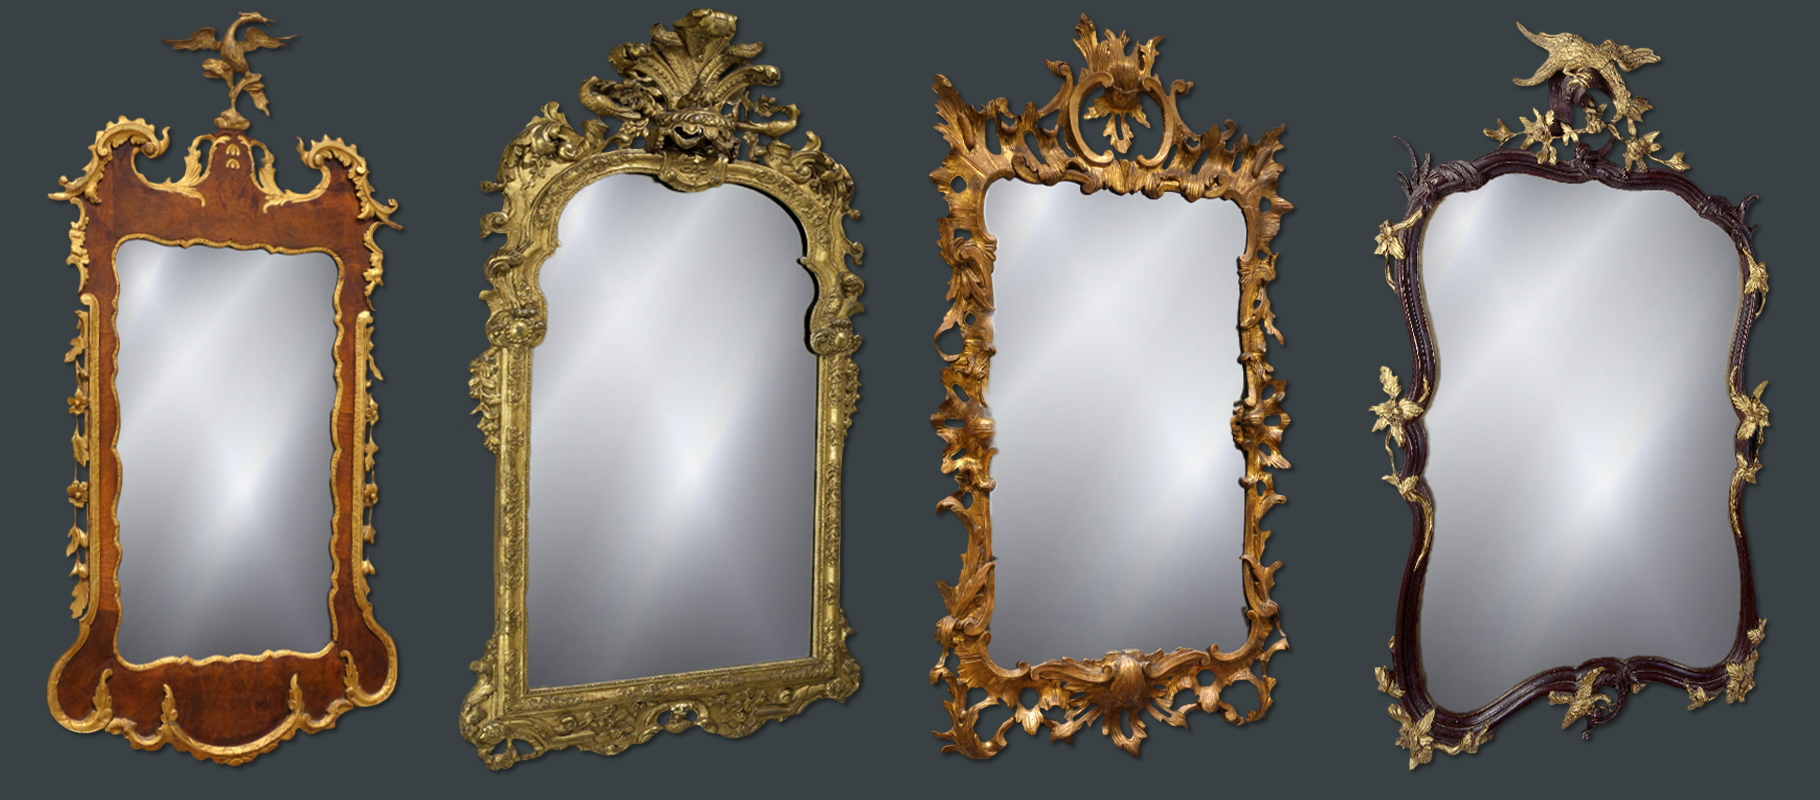 Gold leaf mirrors